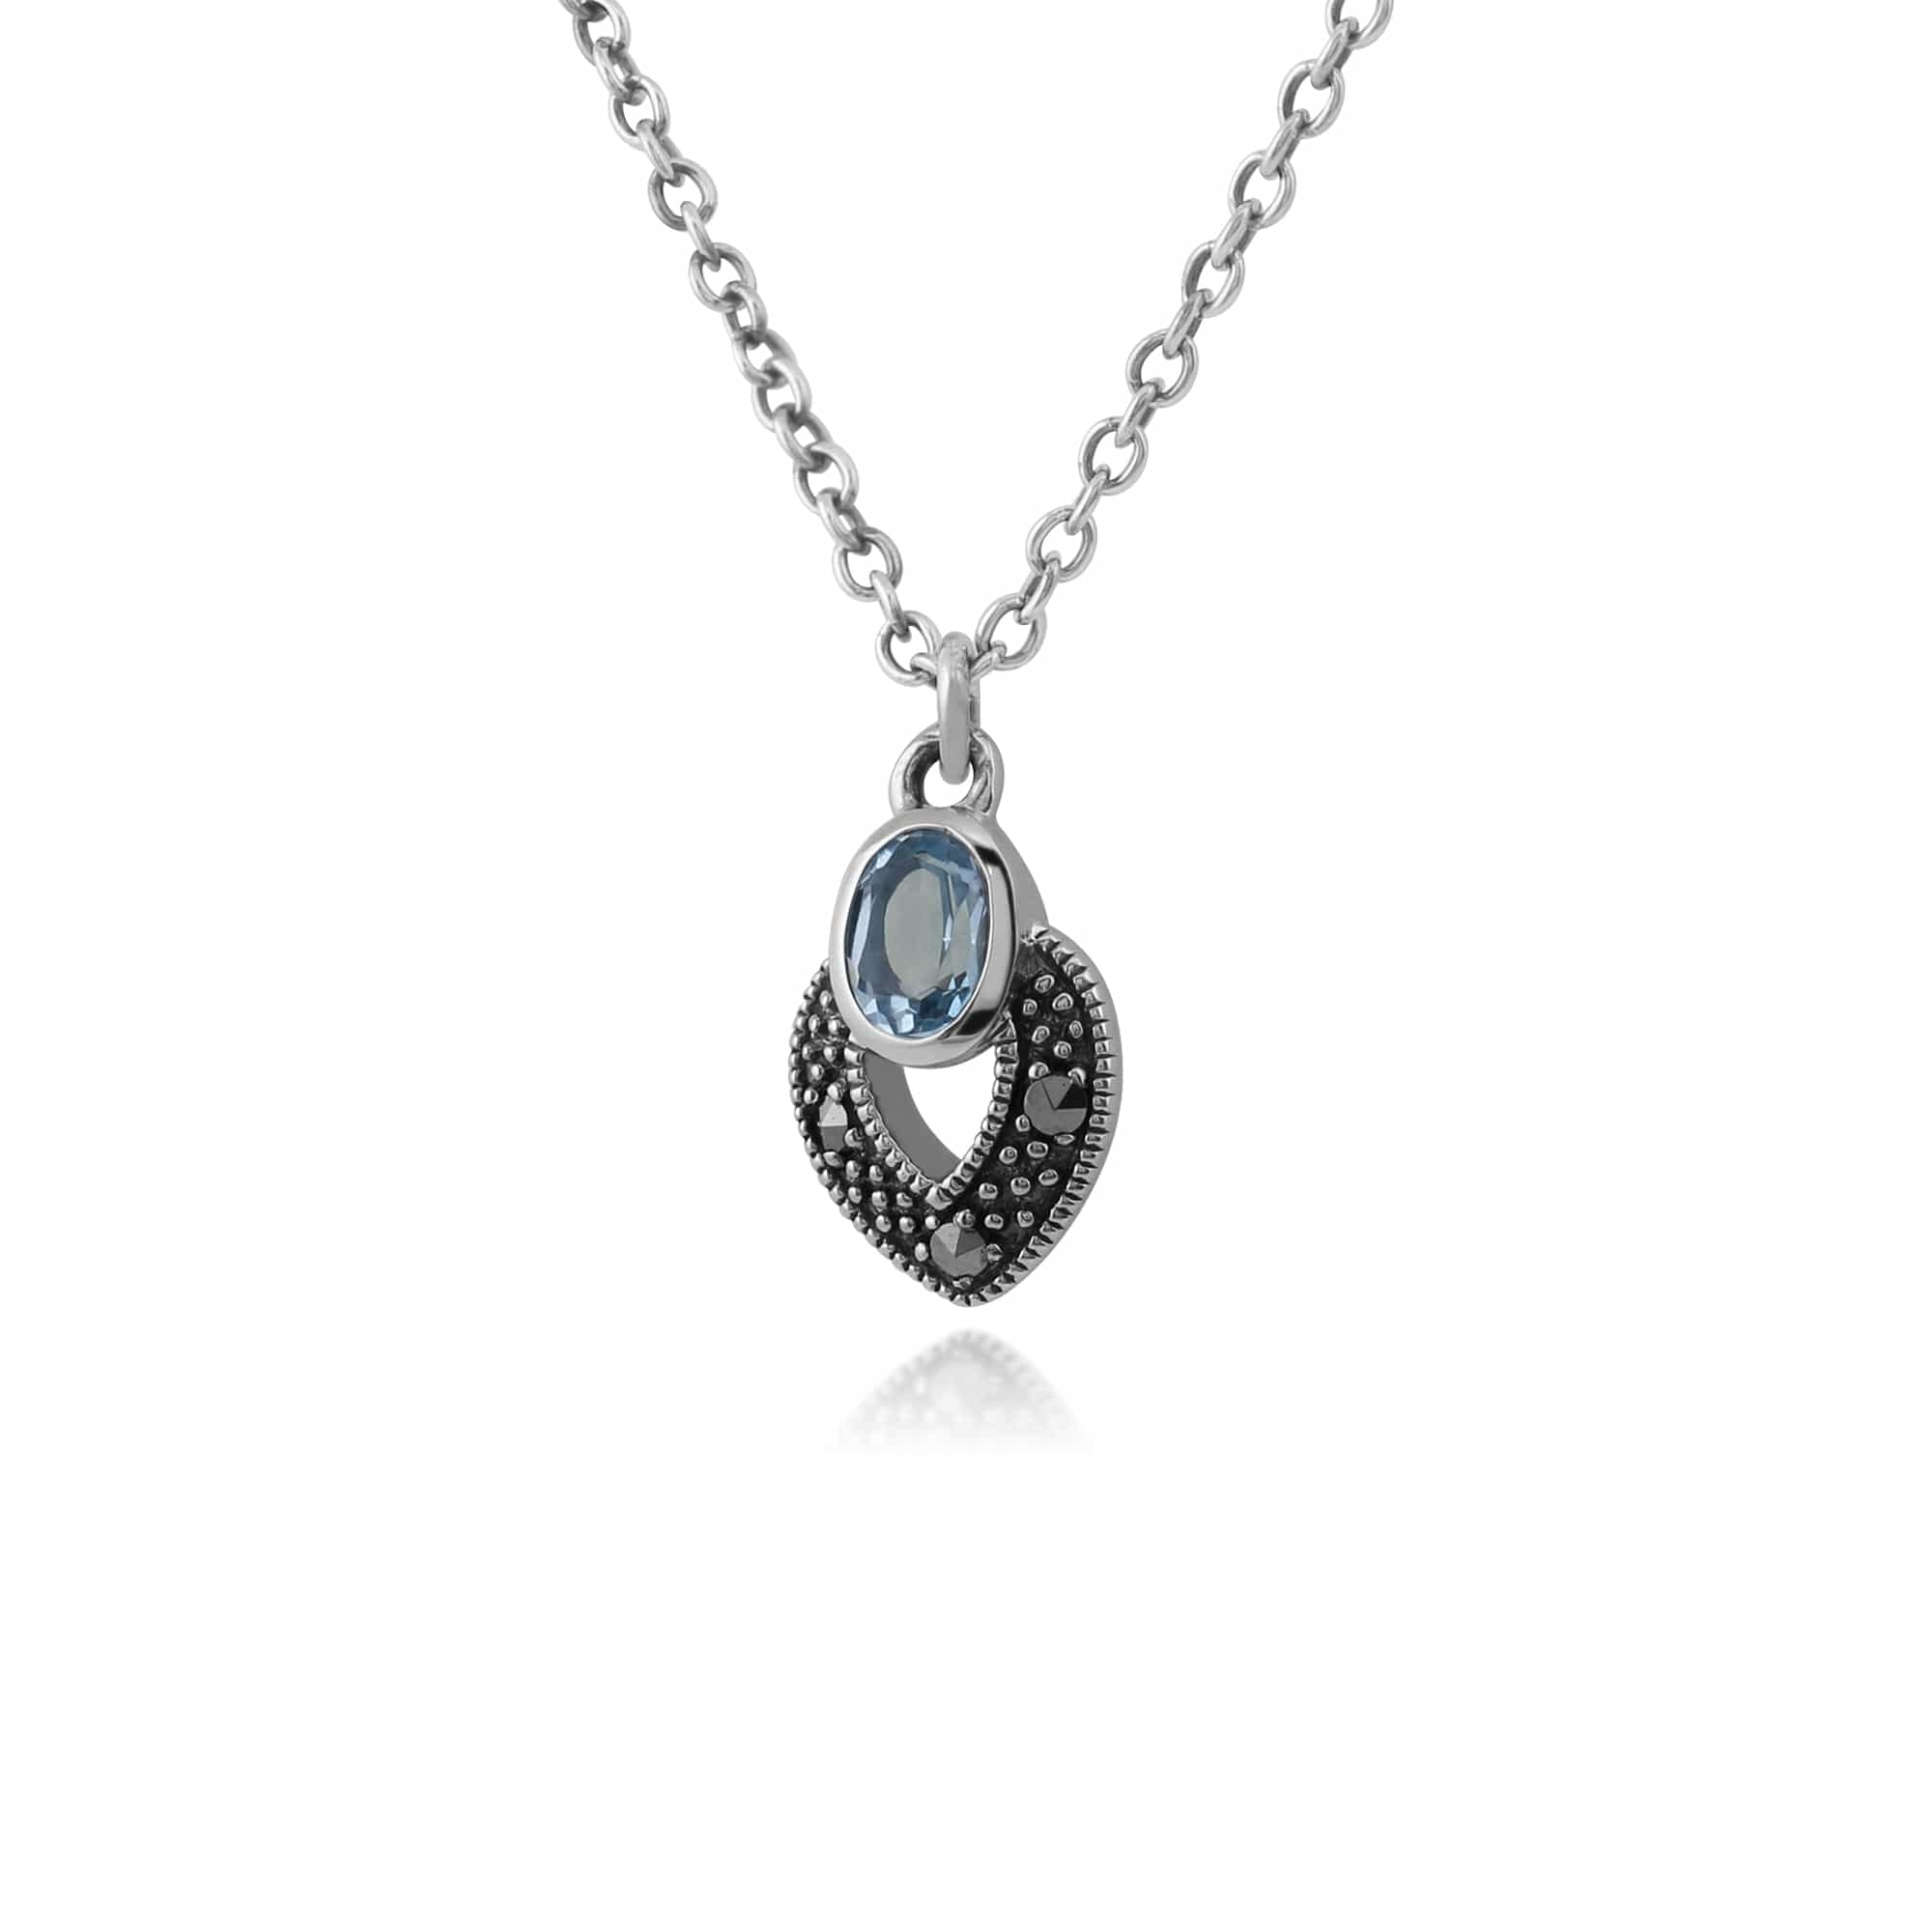 Art Deco Style Oval Blue Topaz & Marcasite Necklace in 925 Sterling Silver - Gemondo